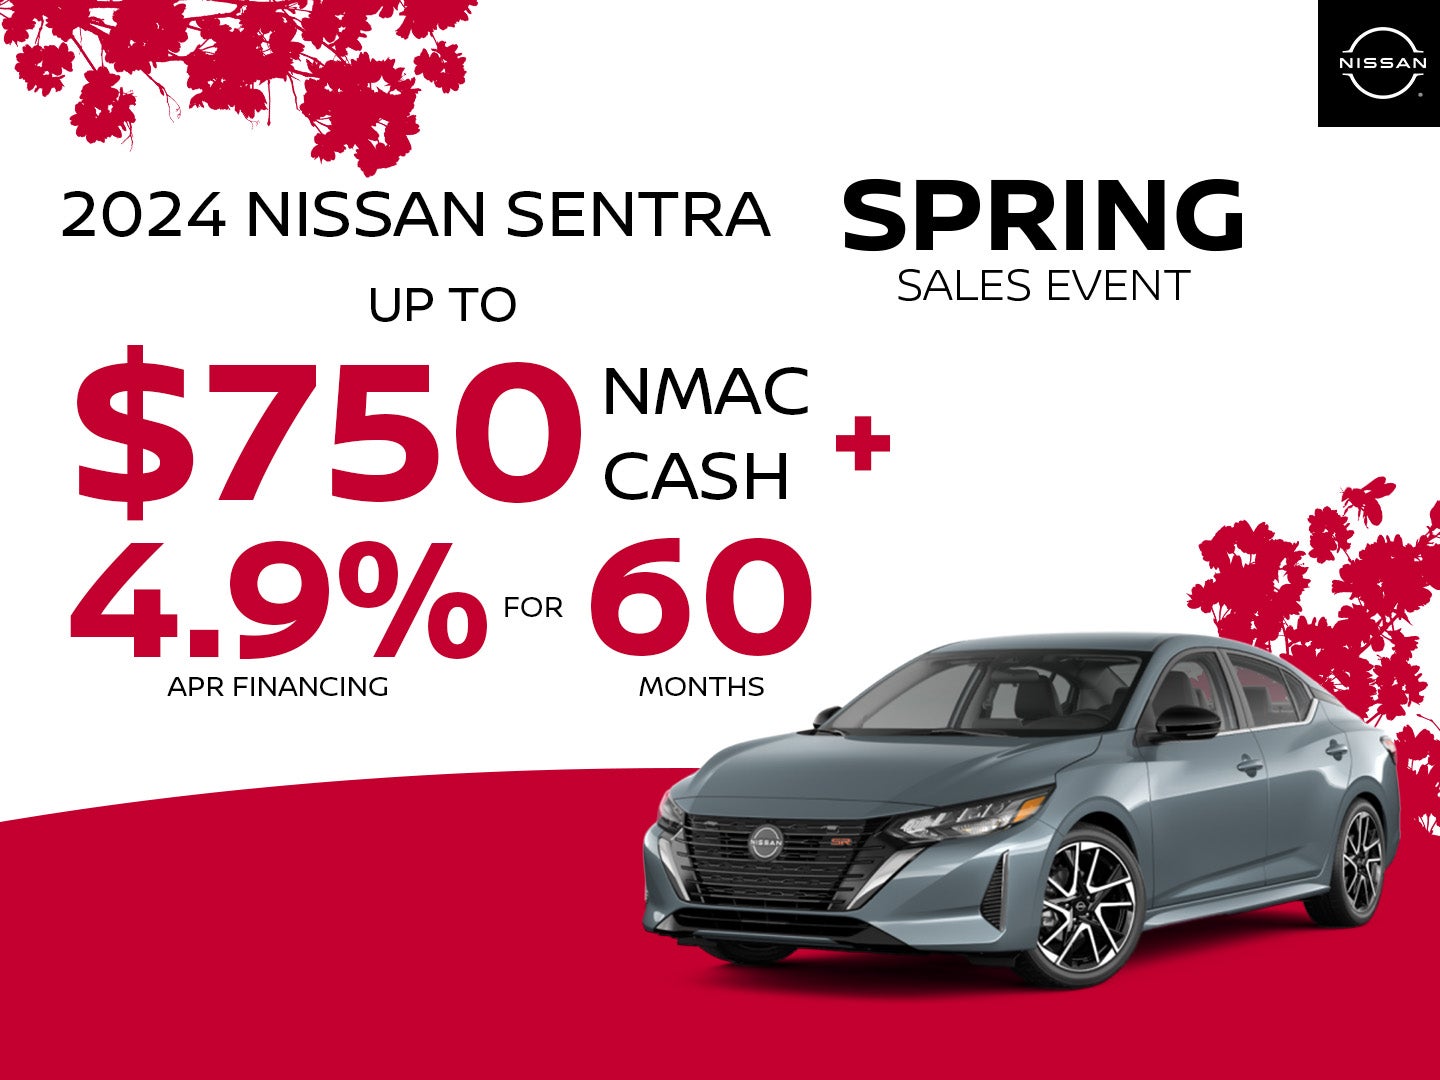 2024 Nissan Sentra
Up to $750 NMAC CASH